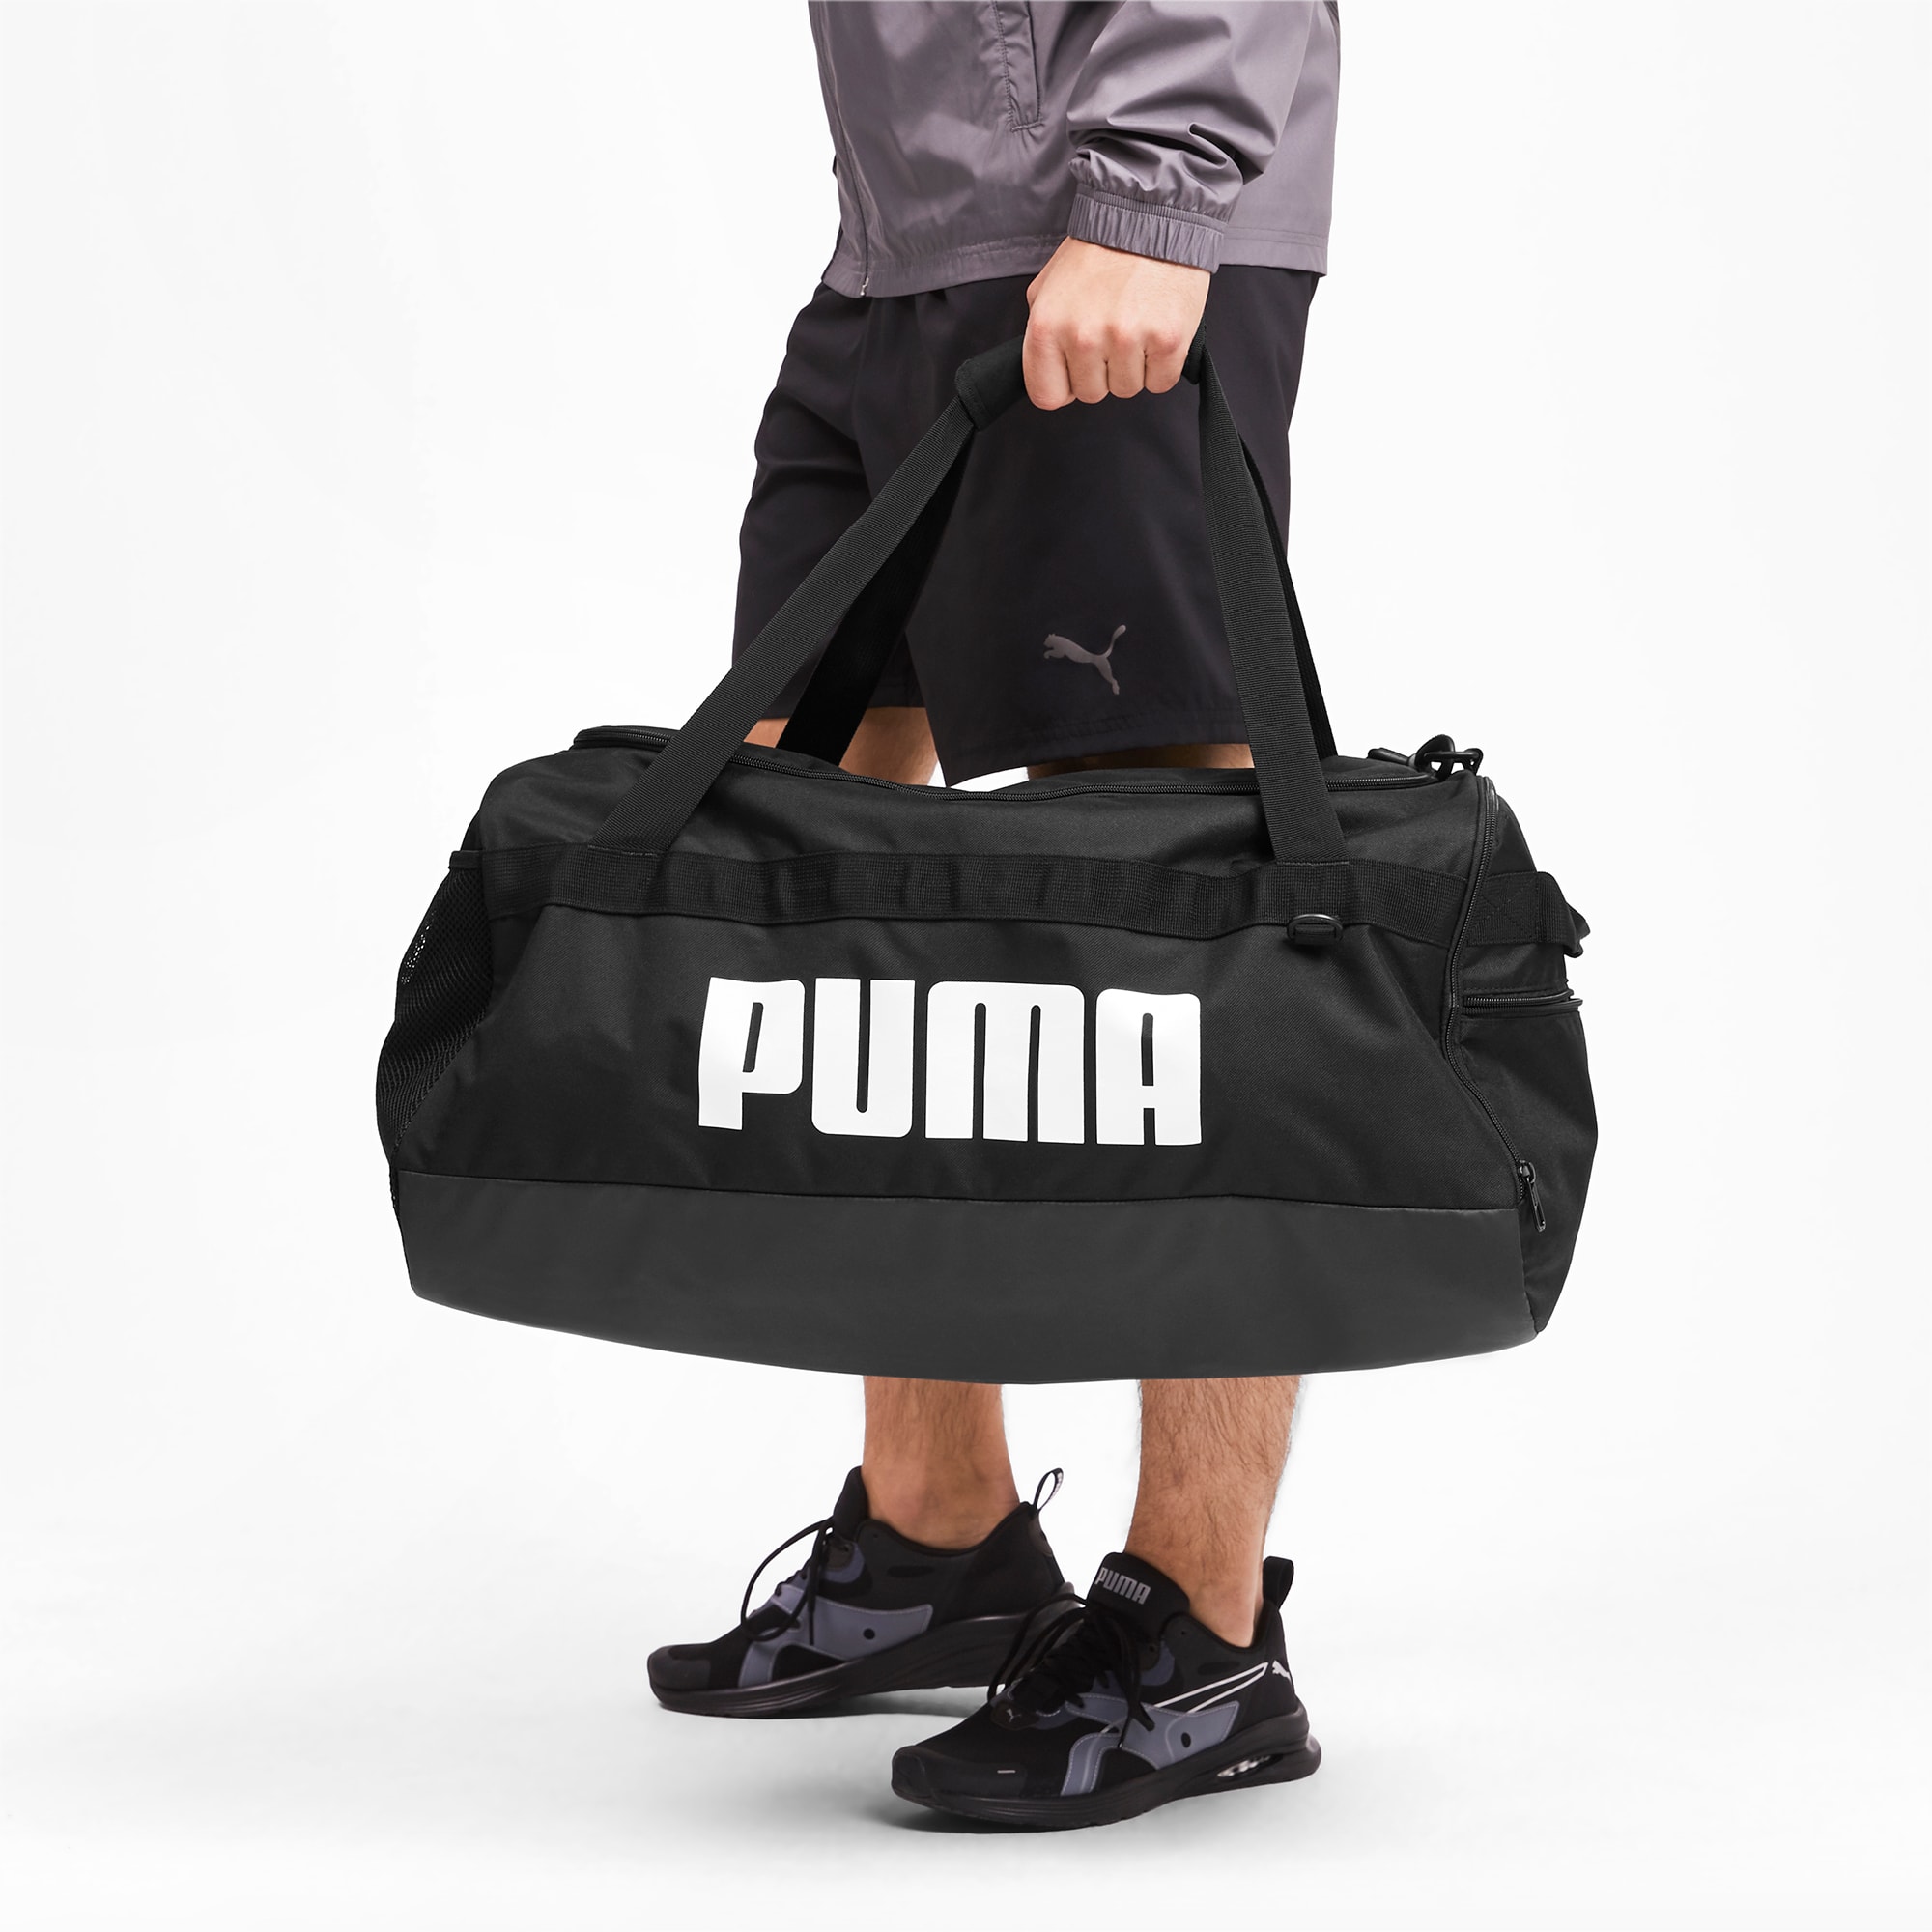 puma large duffle bag